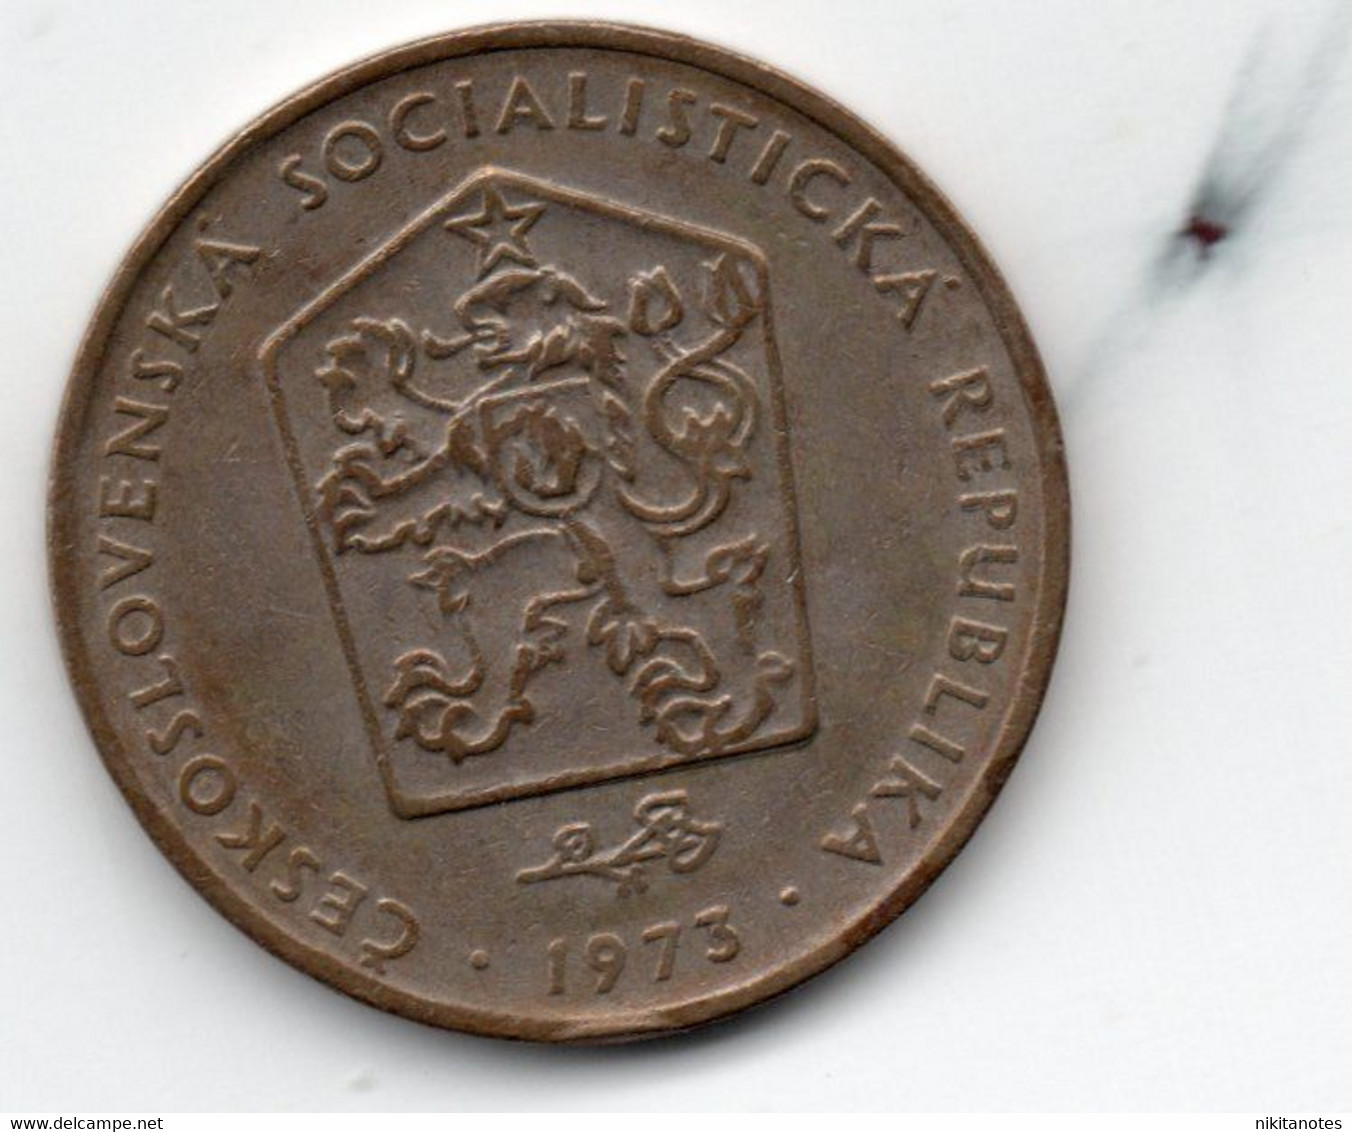 REPUBBLICA  SOCIALISTICKA CECA - 2 KORUN - 1973 Coin ČESKÁ REPUBLIKA - Czechoslovakia